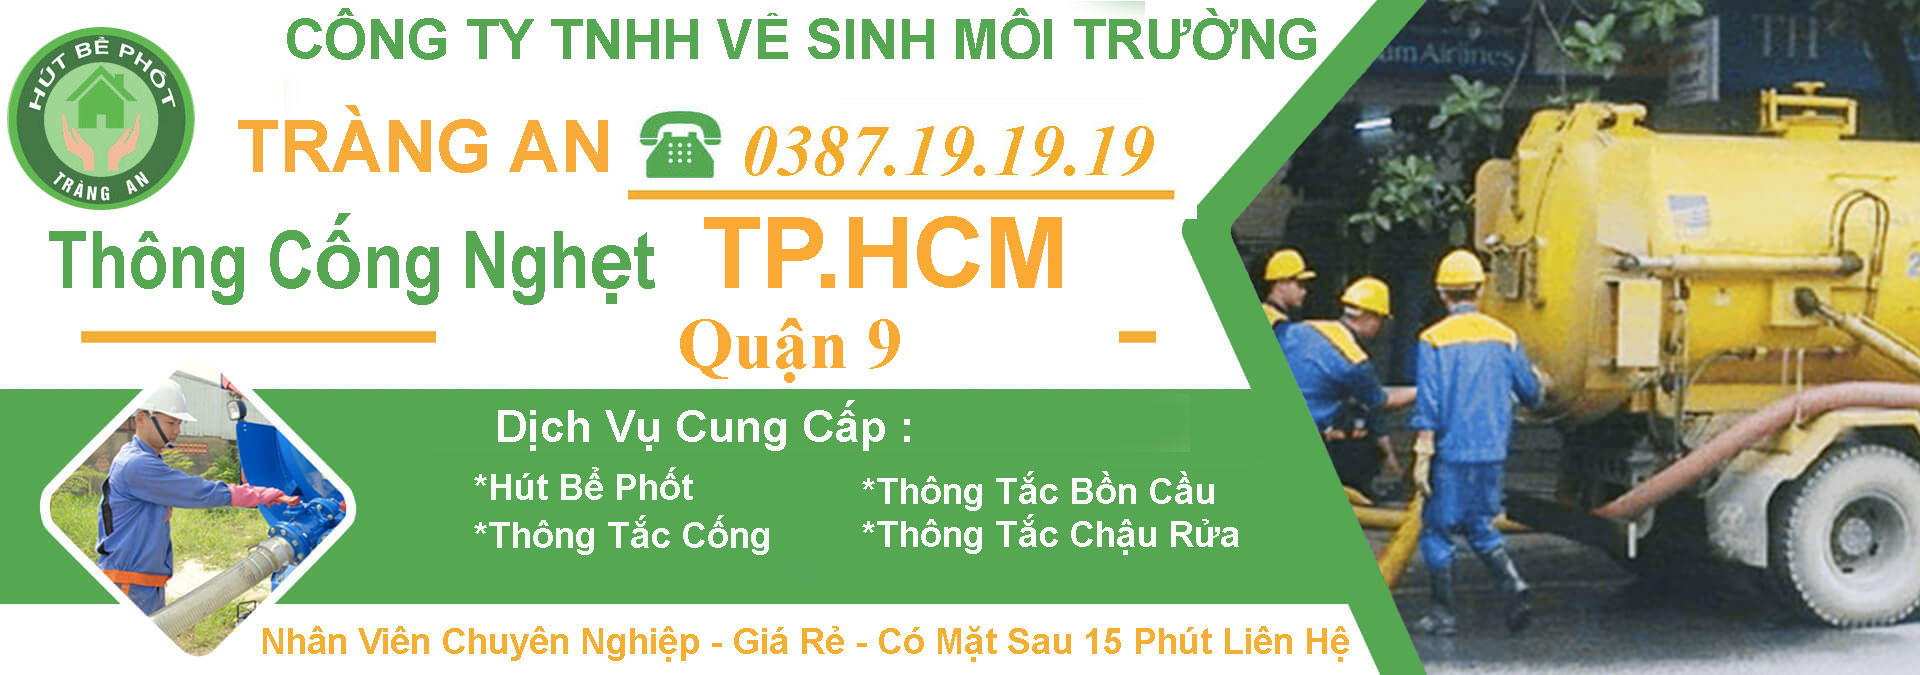 Thong Cong Nghet Tphcm Quan 9